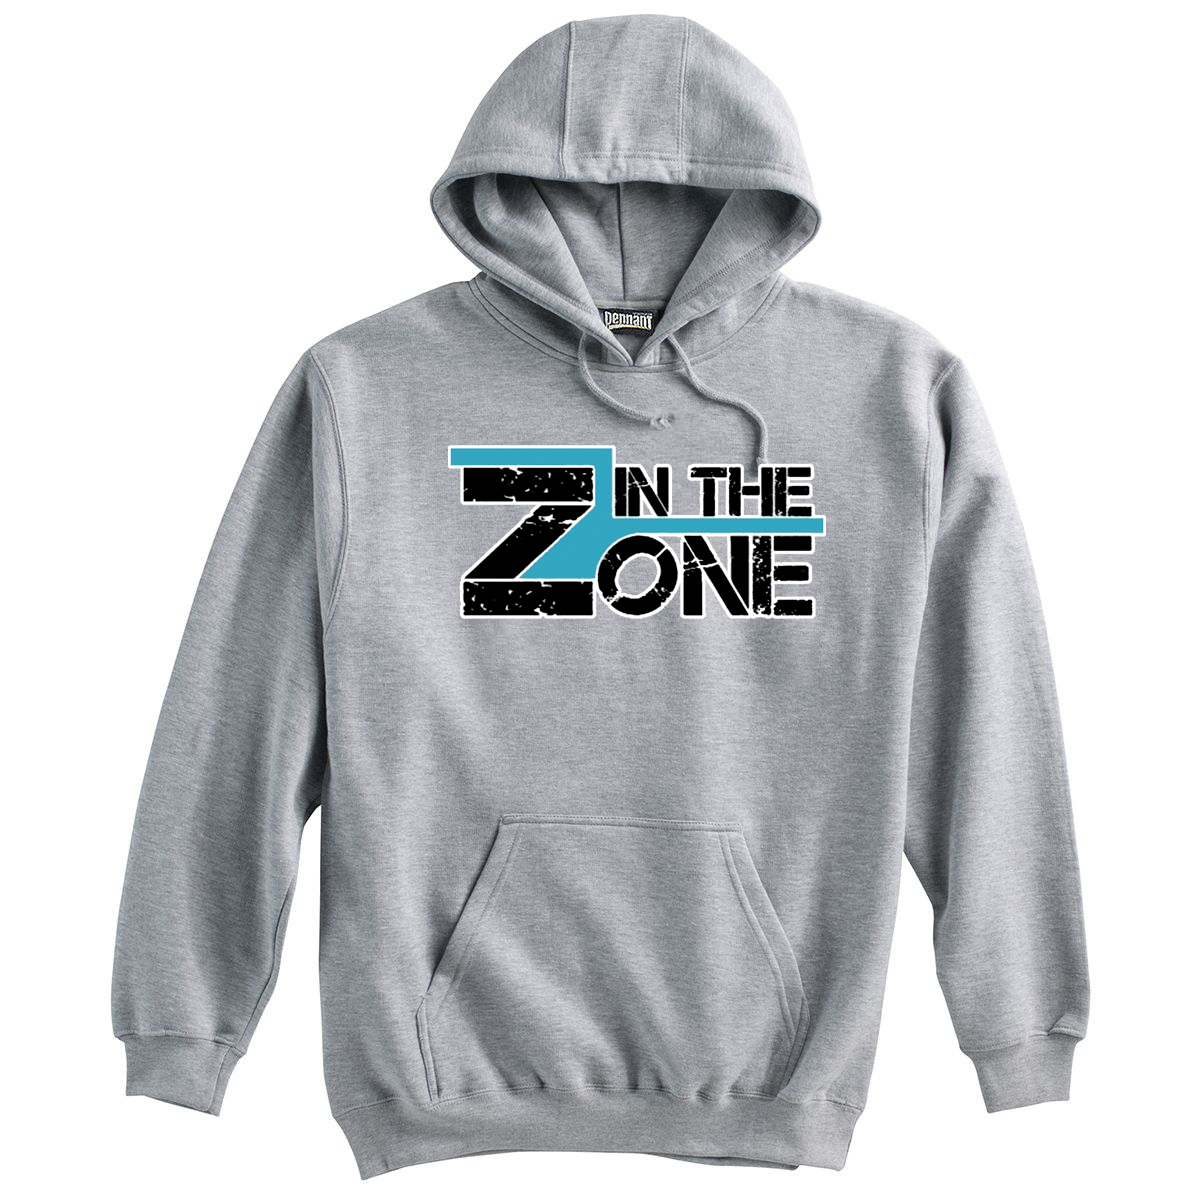 The Zone Sweatshirt